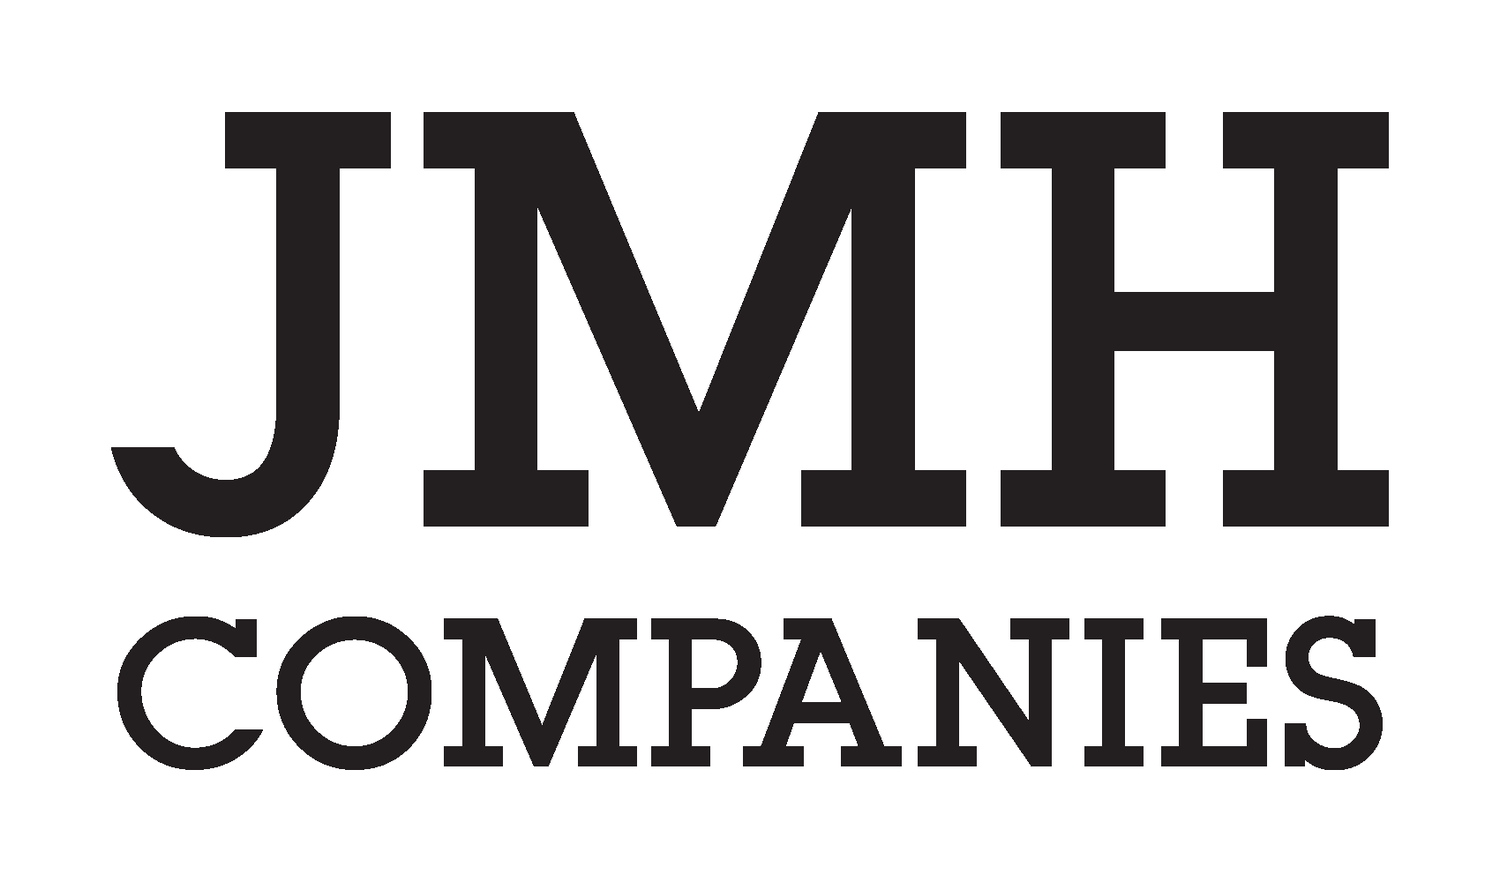 JMH Companies